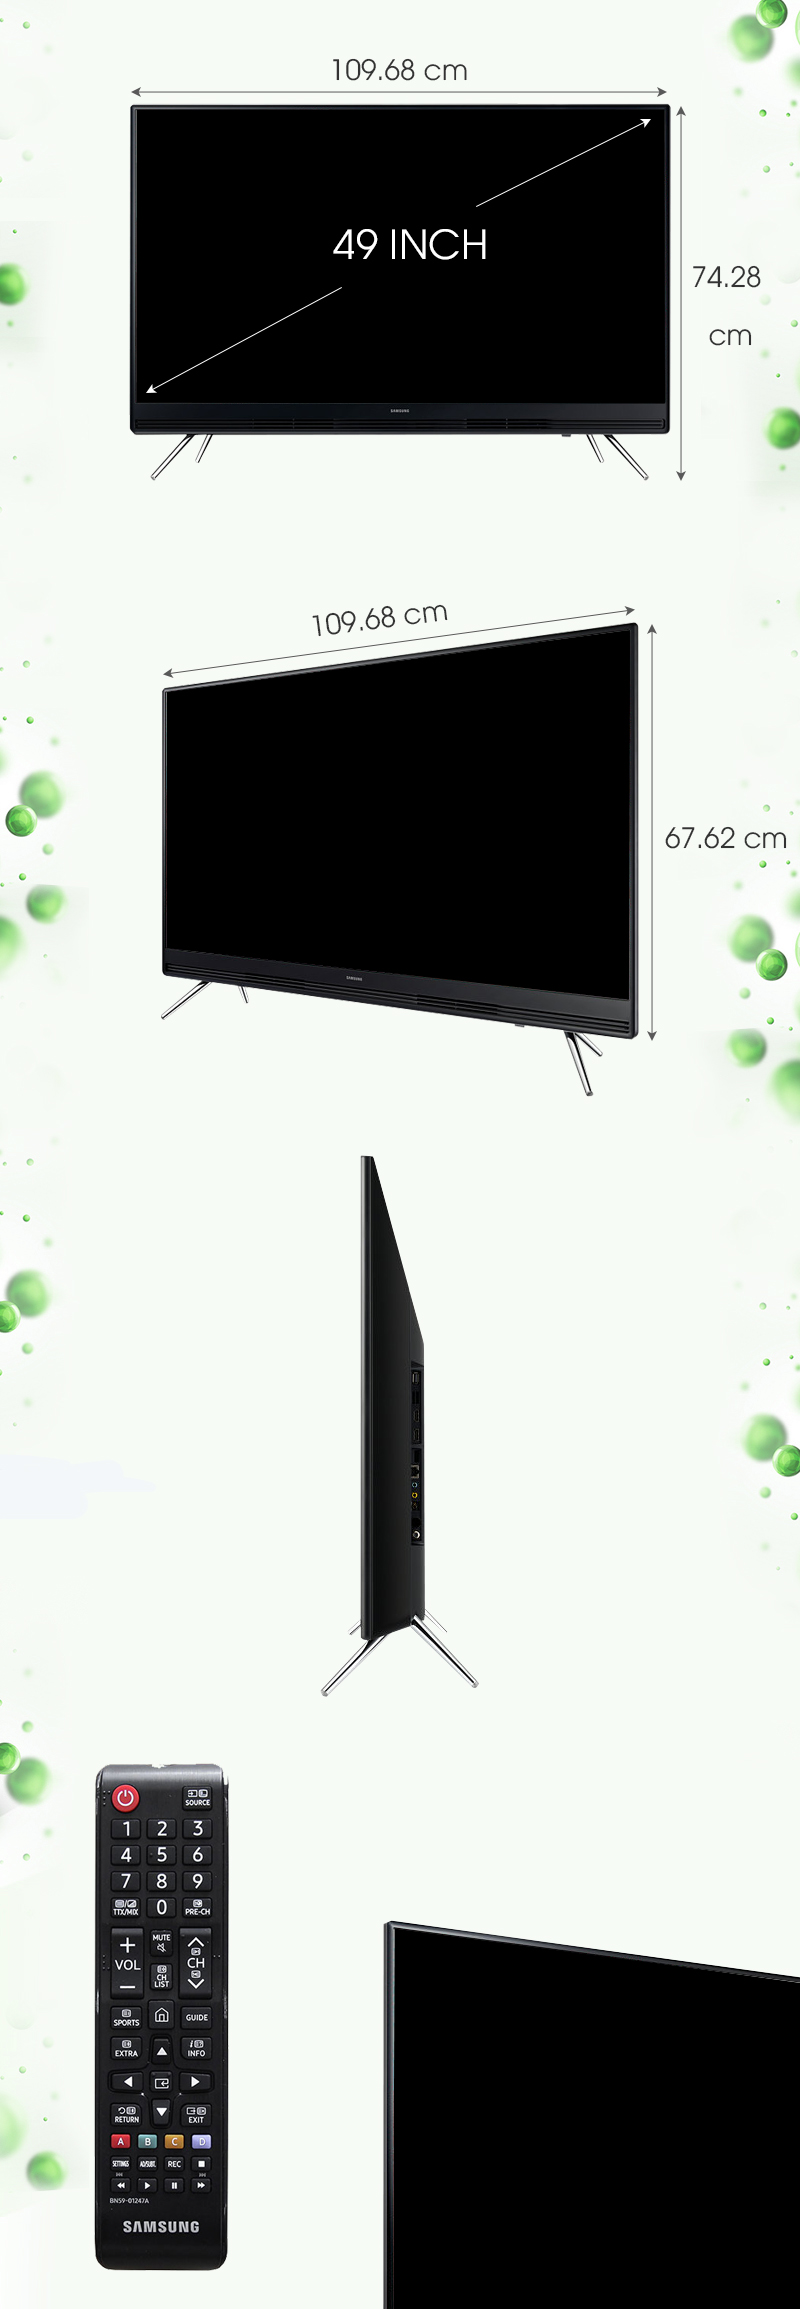 Smart Tivi Samsung 49 inch UA49K5300 - Kích thước tivi